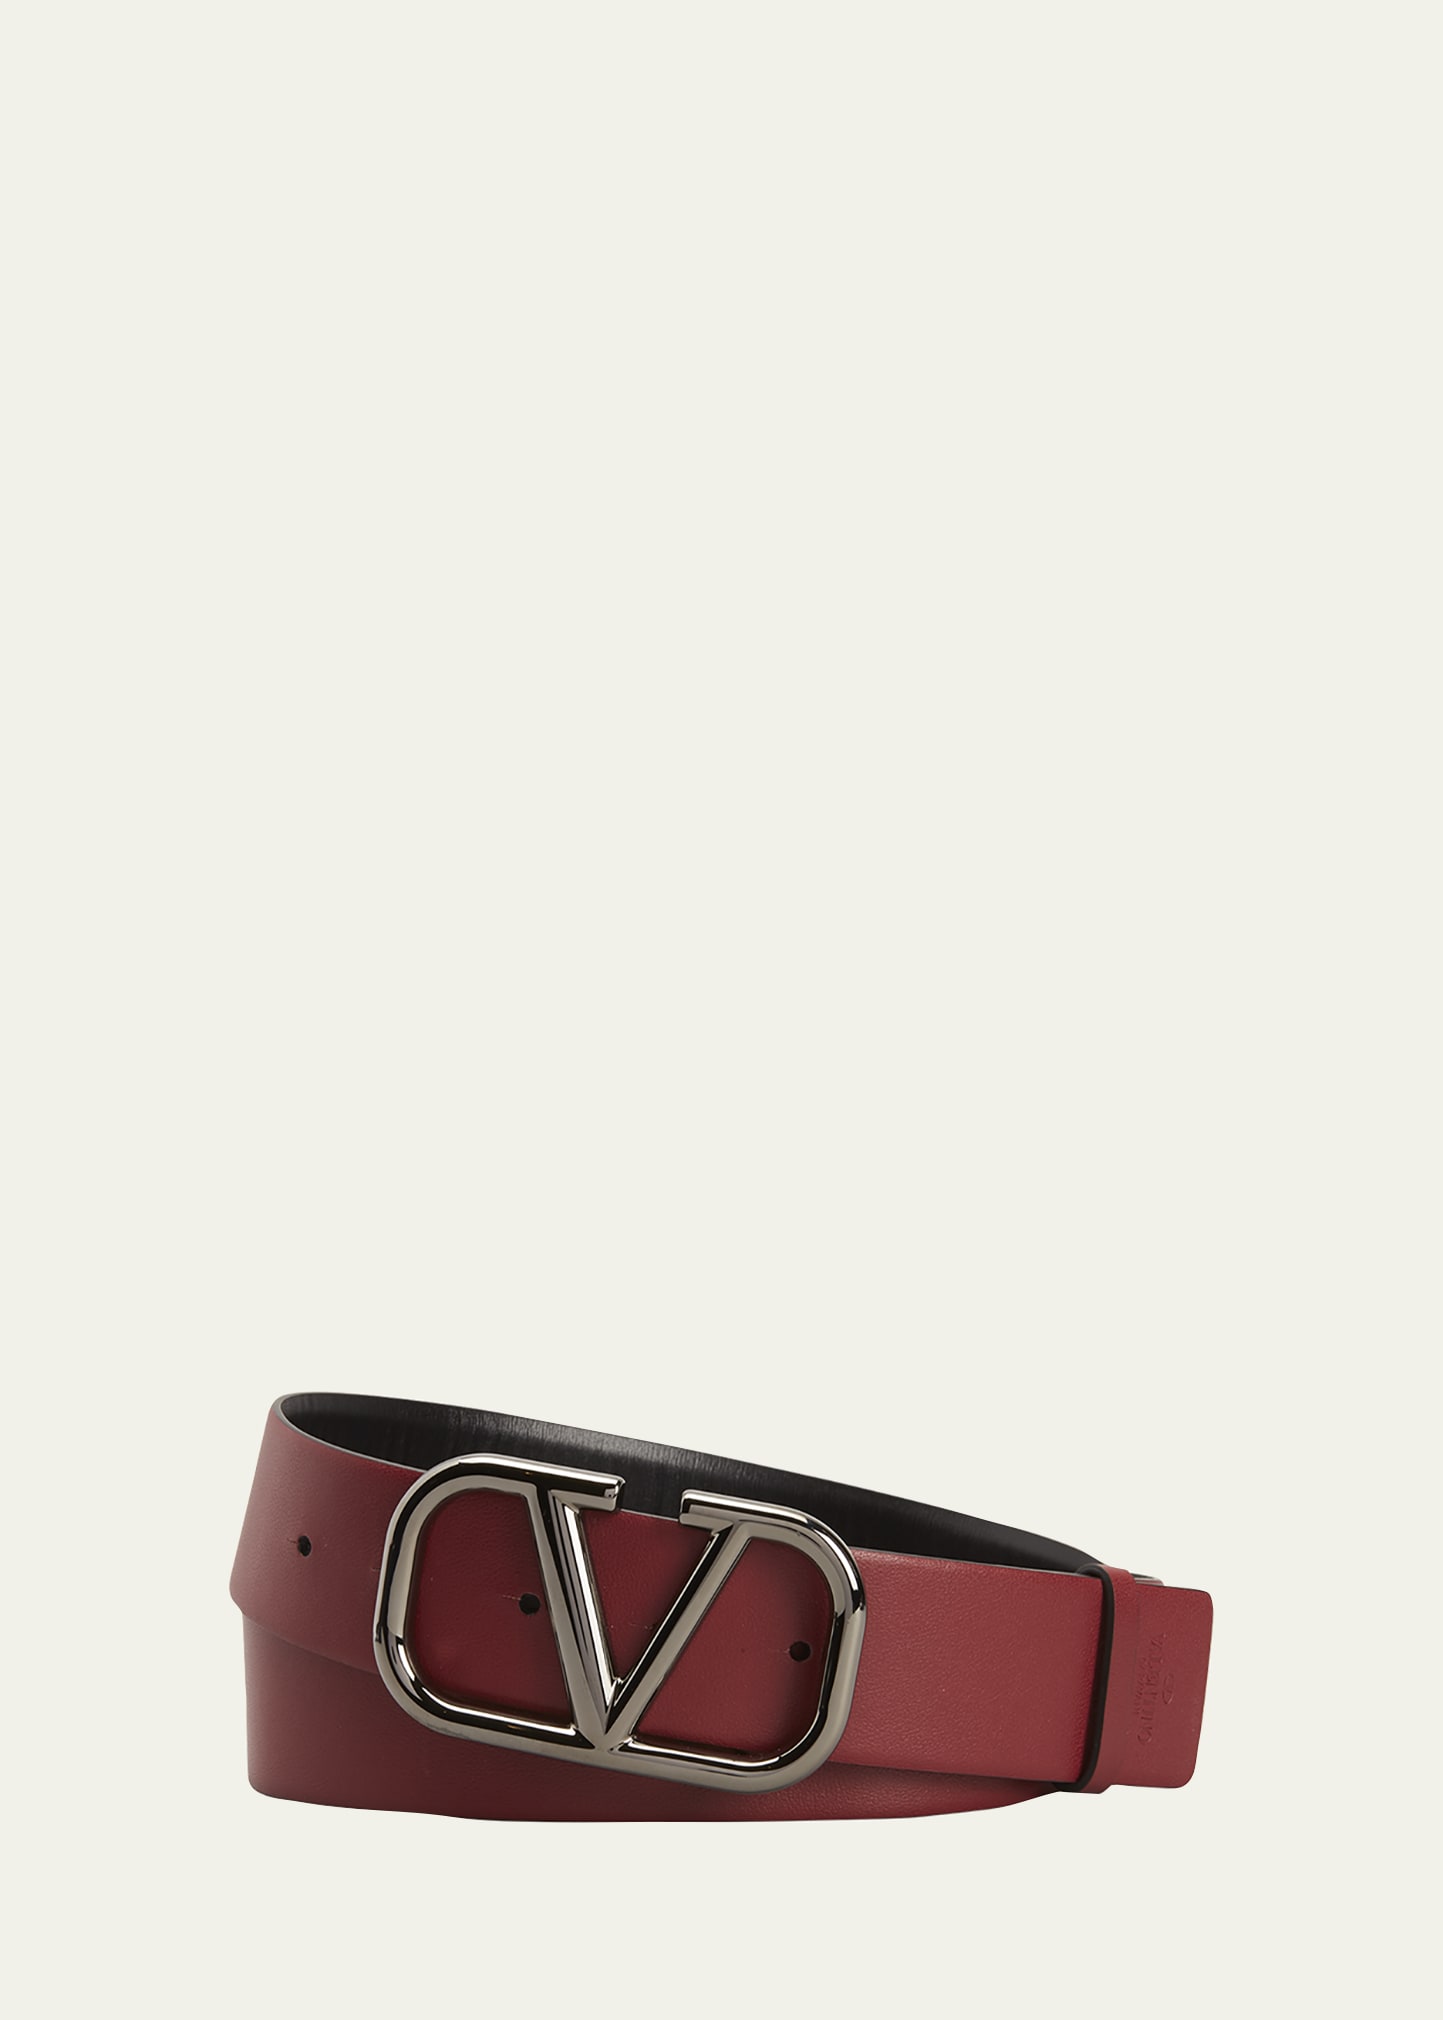 Valentino Garavani Monogram-Jacquard Buckle Belt